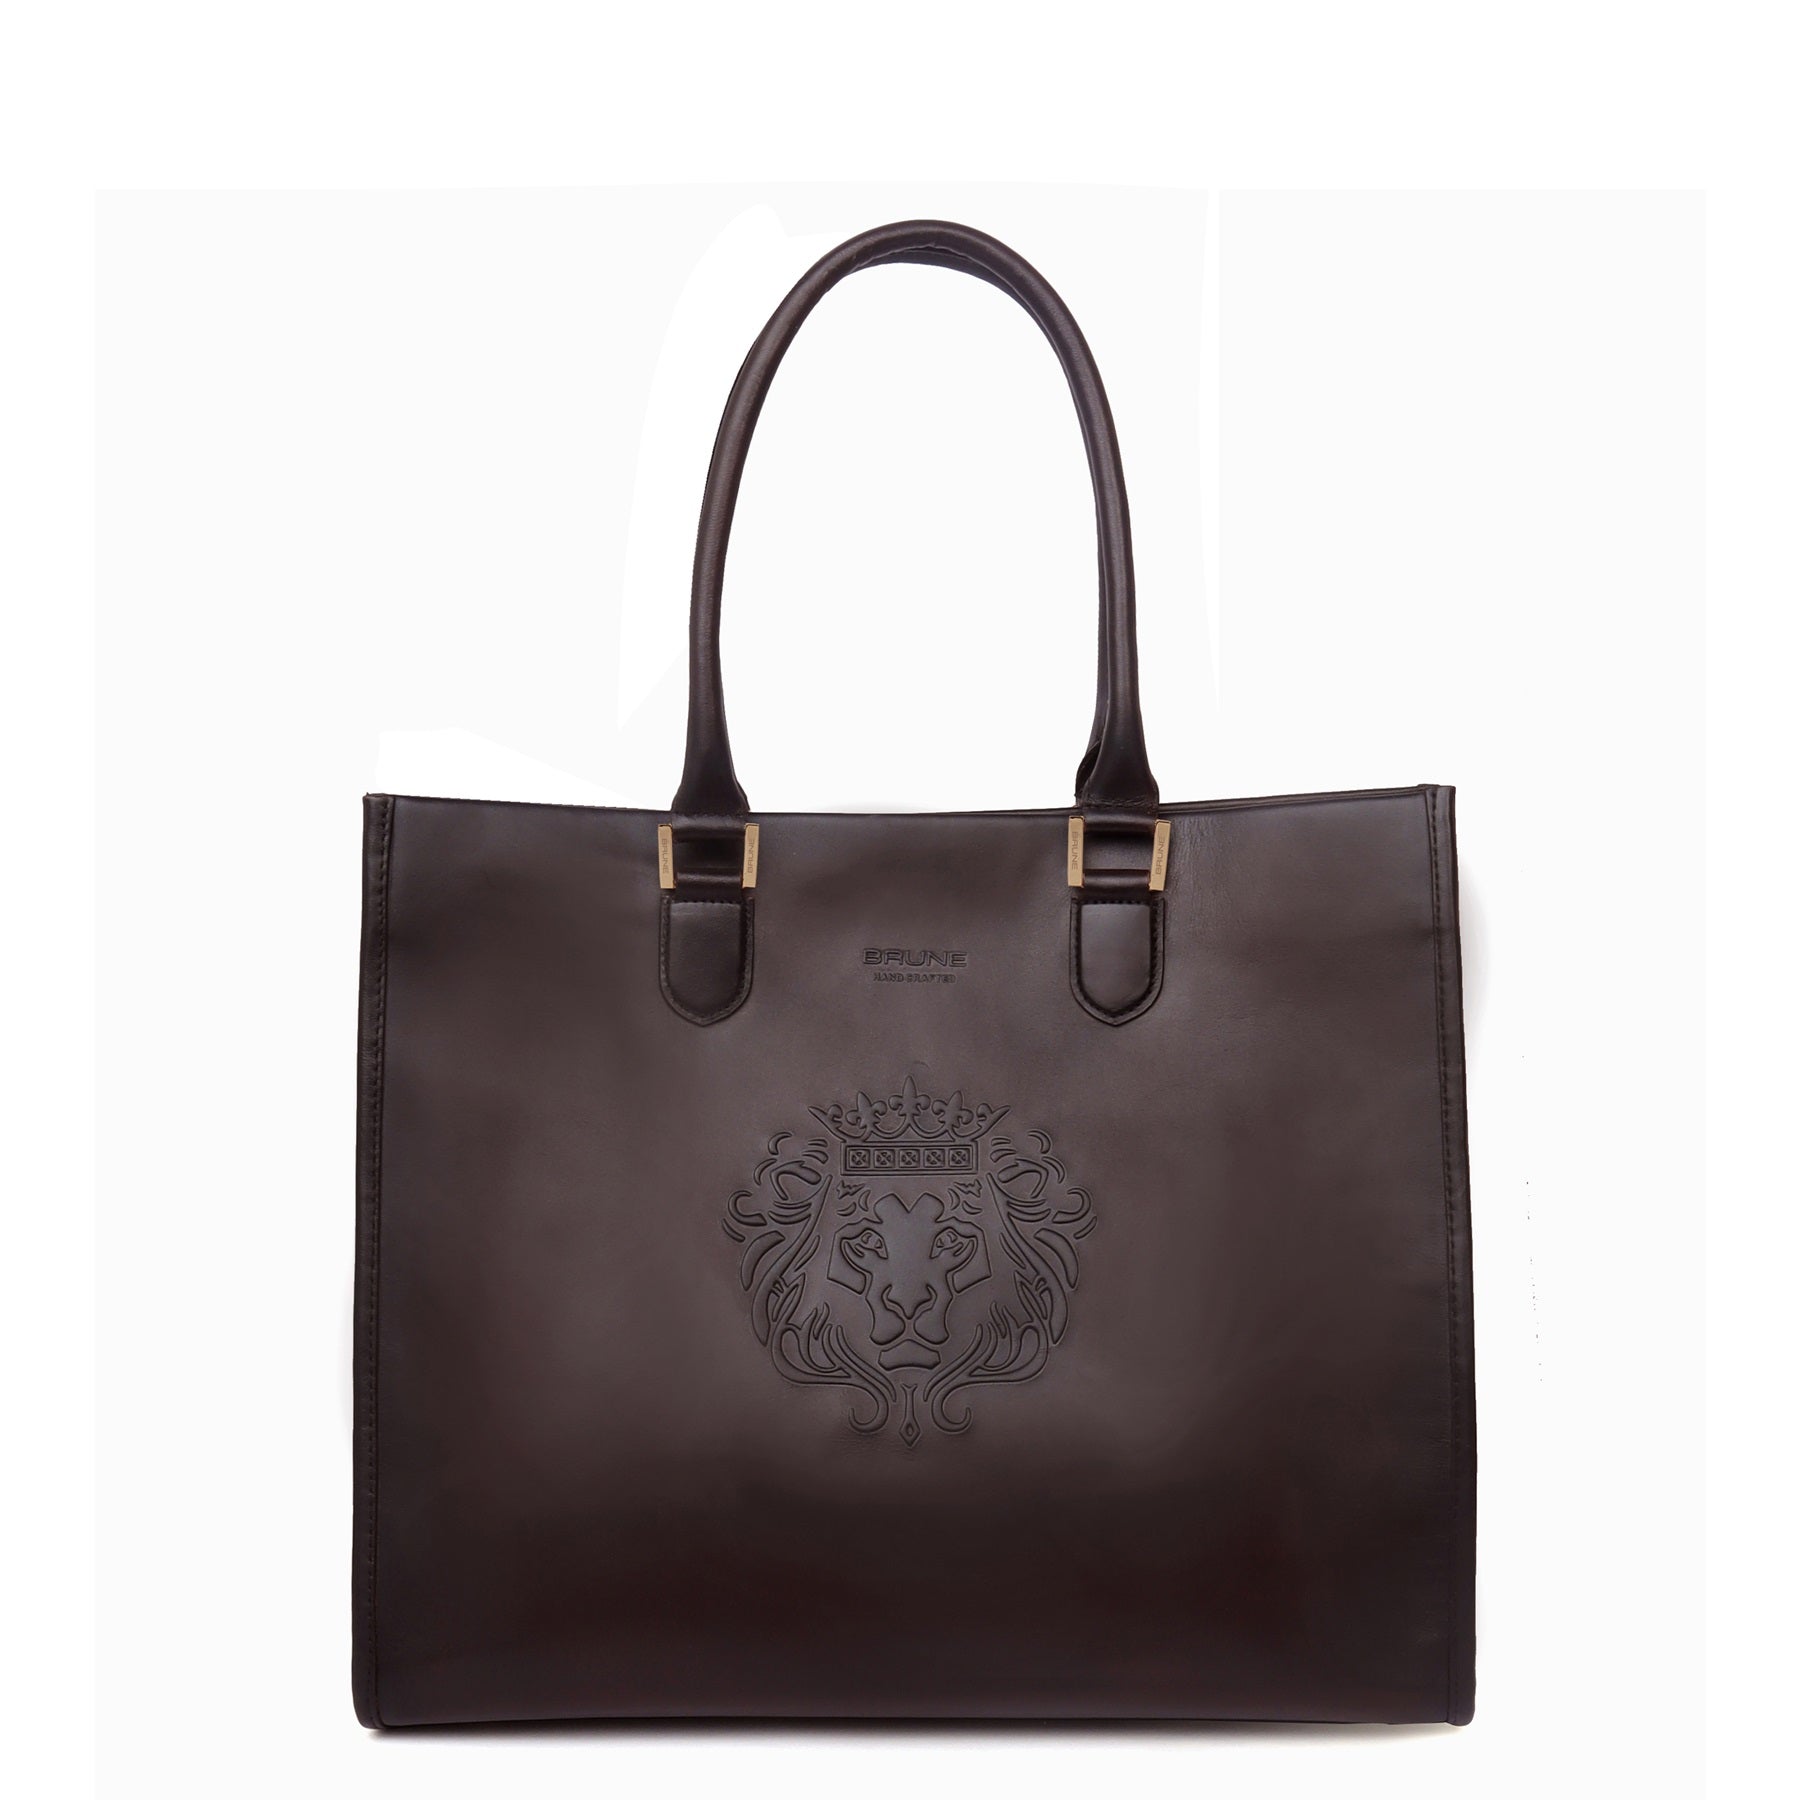 Medium Size Hand Bag in Dark Brown Leather